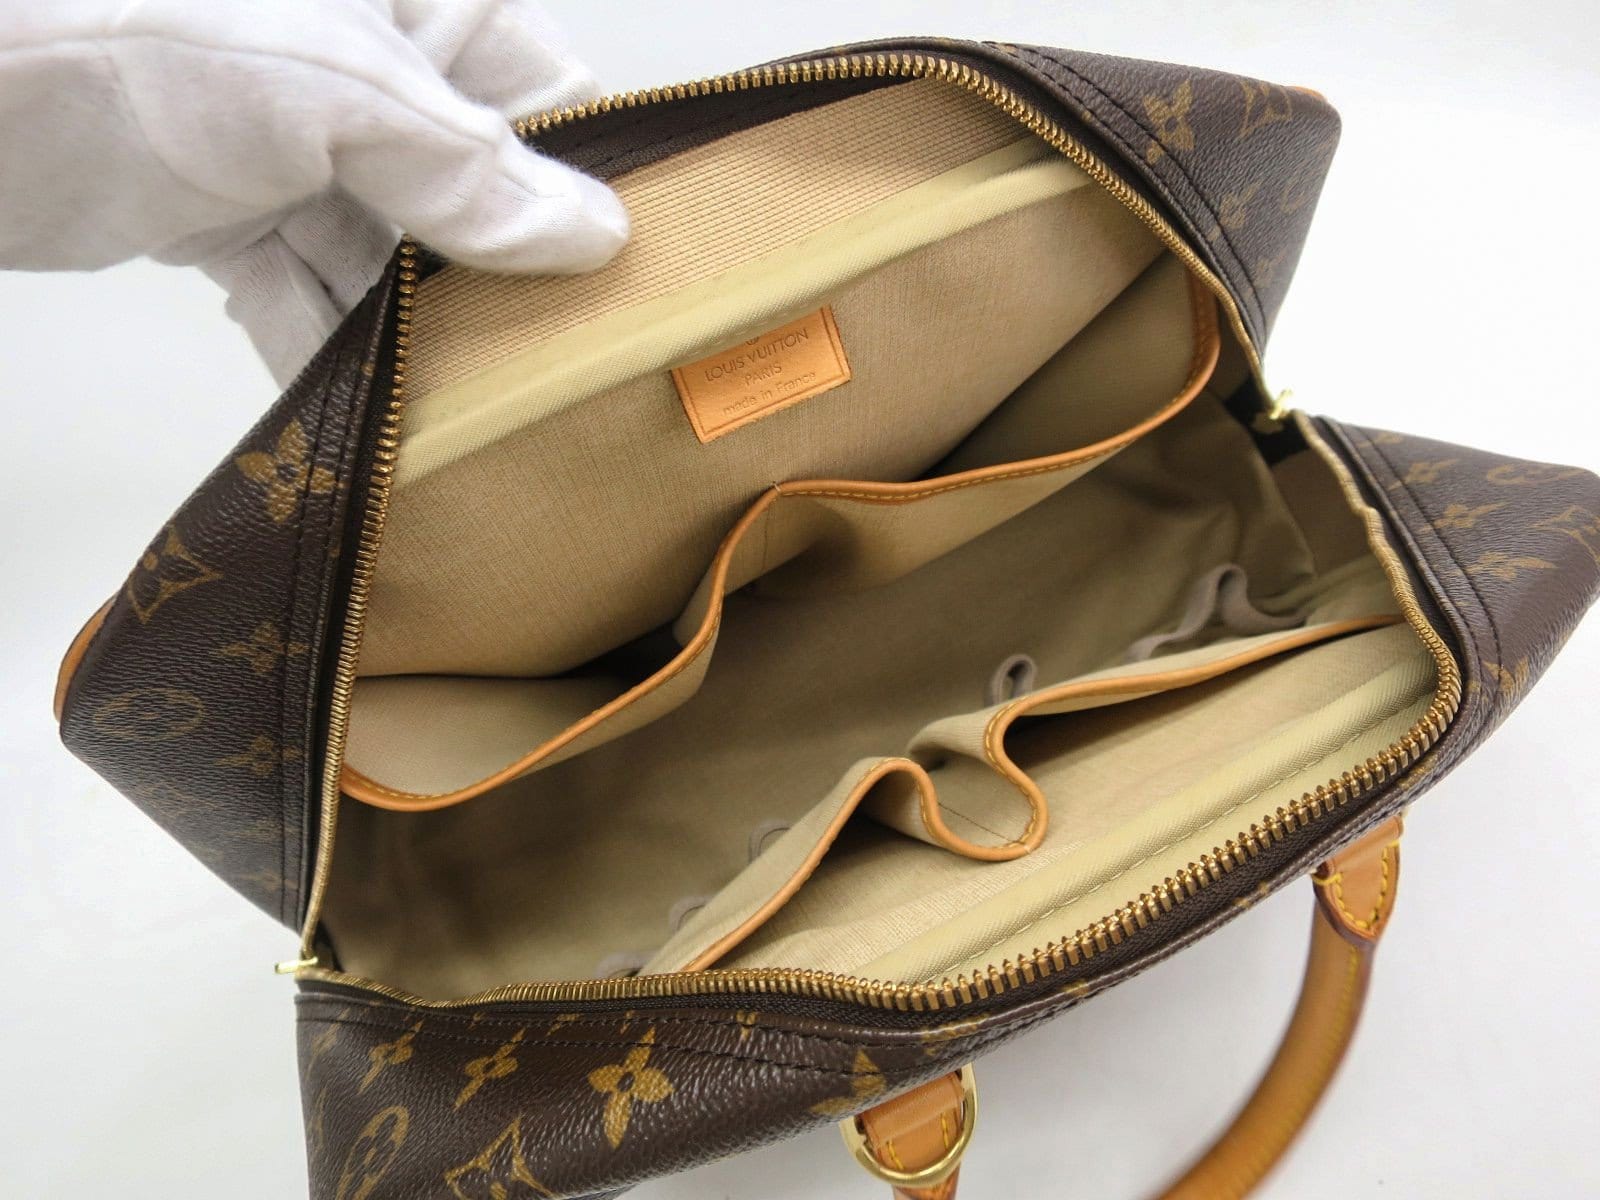 Louis Vuitton Bowling Vanity Bag